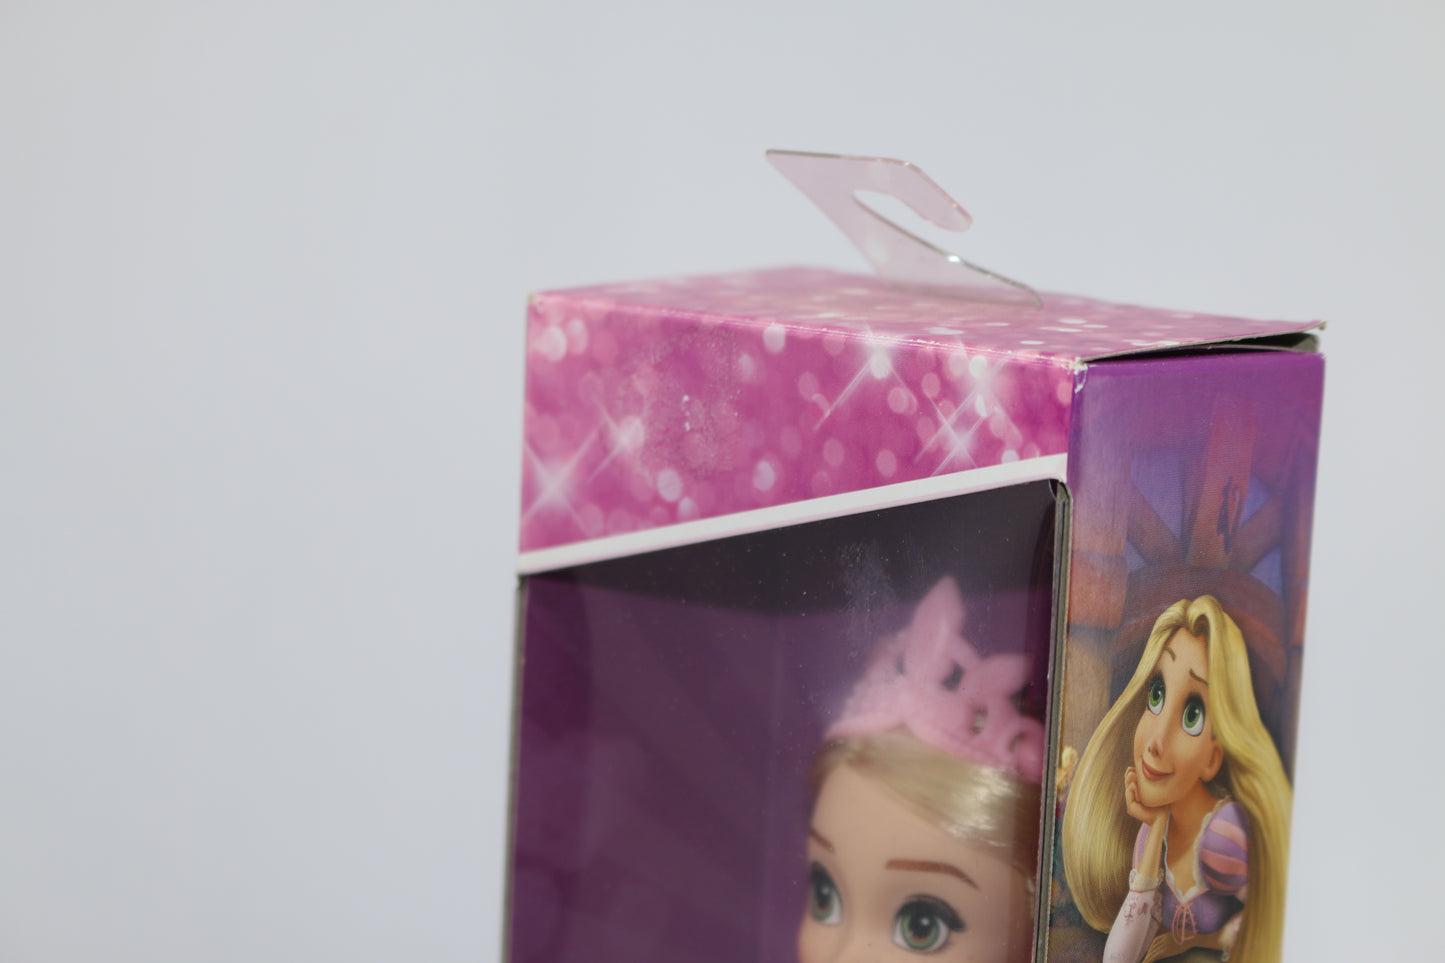 Disney Princess Rapunzel Hasbro 2017 dolll figure New In opened Box